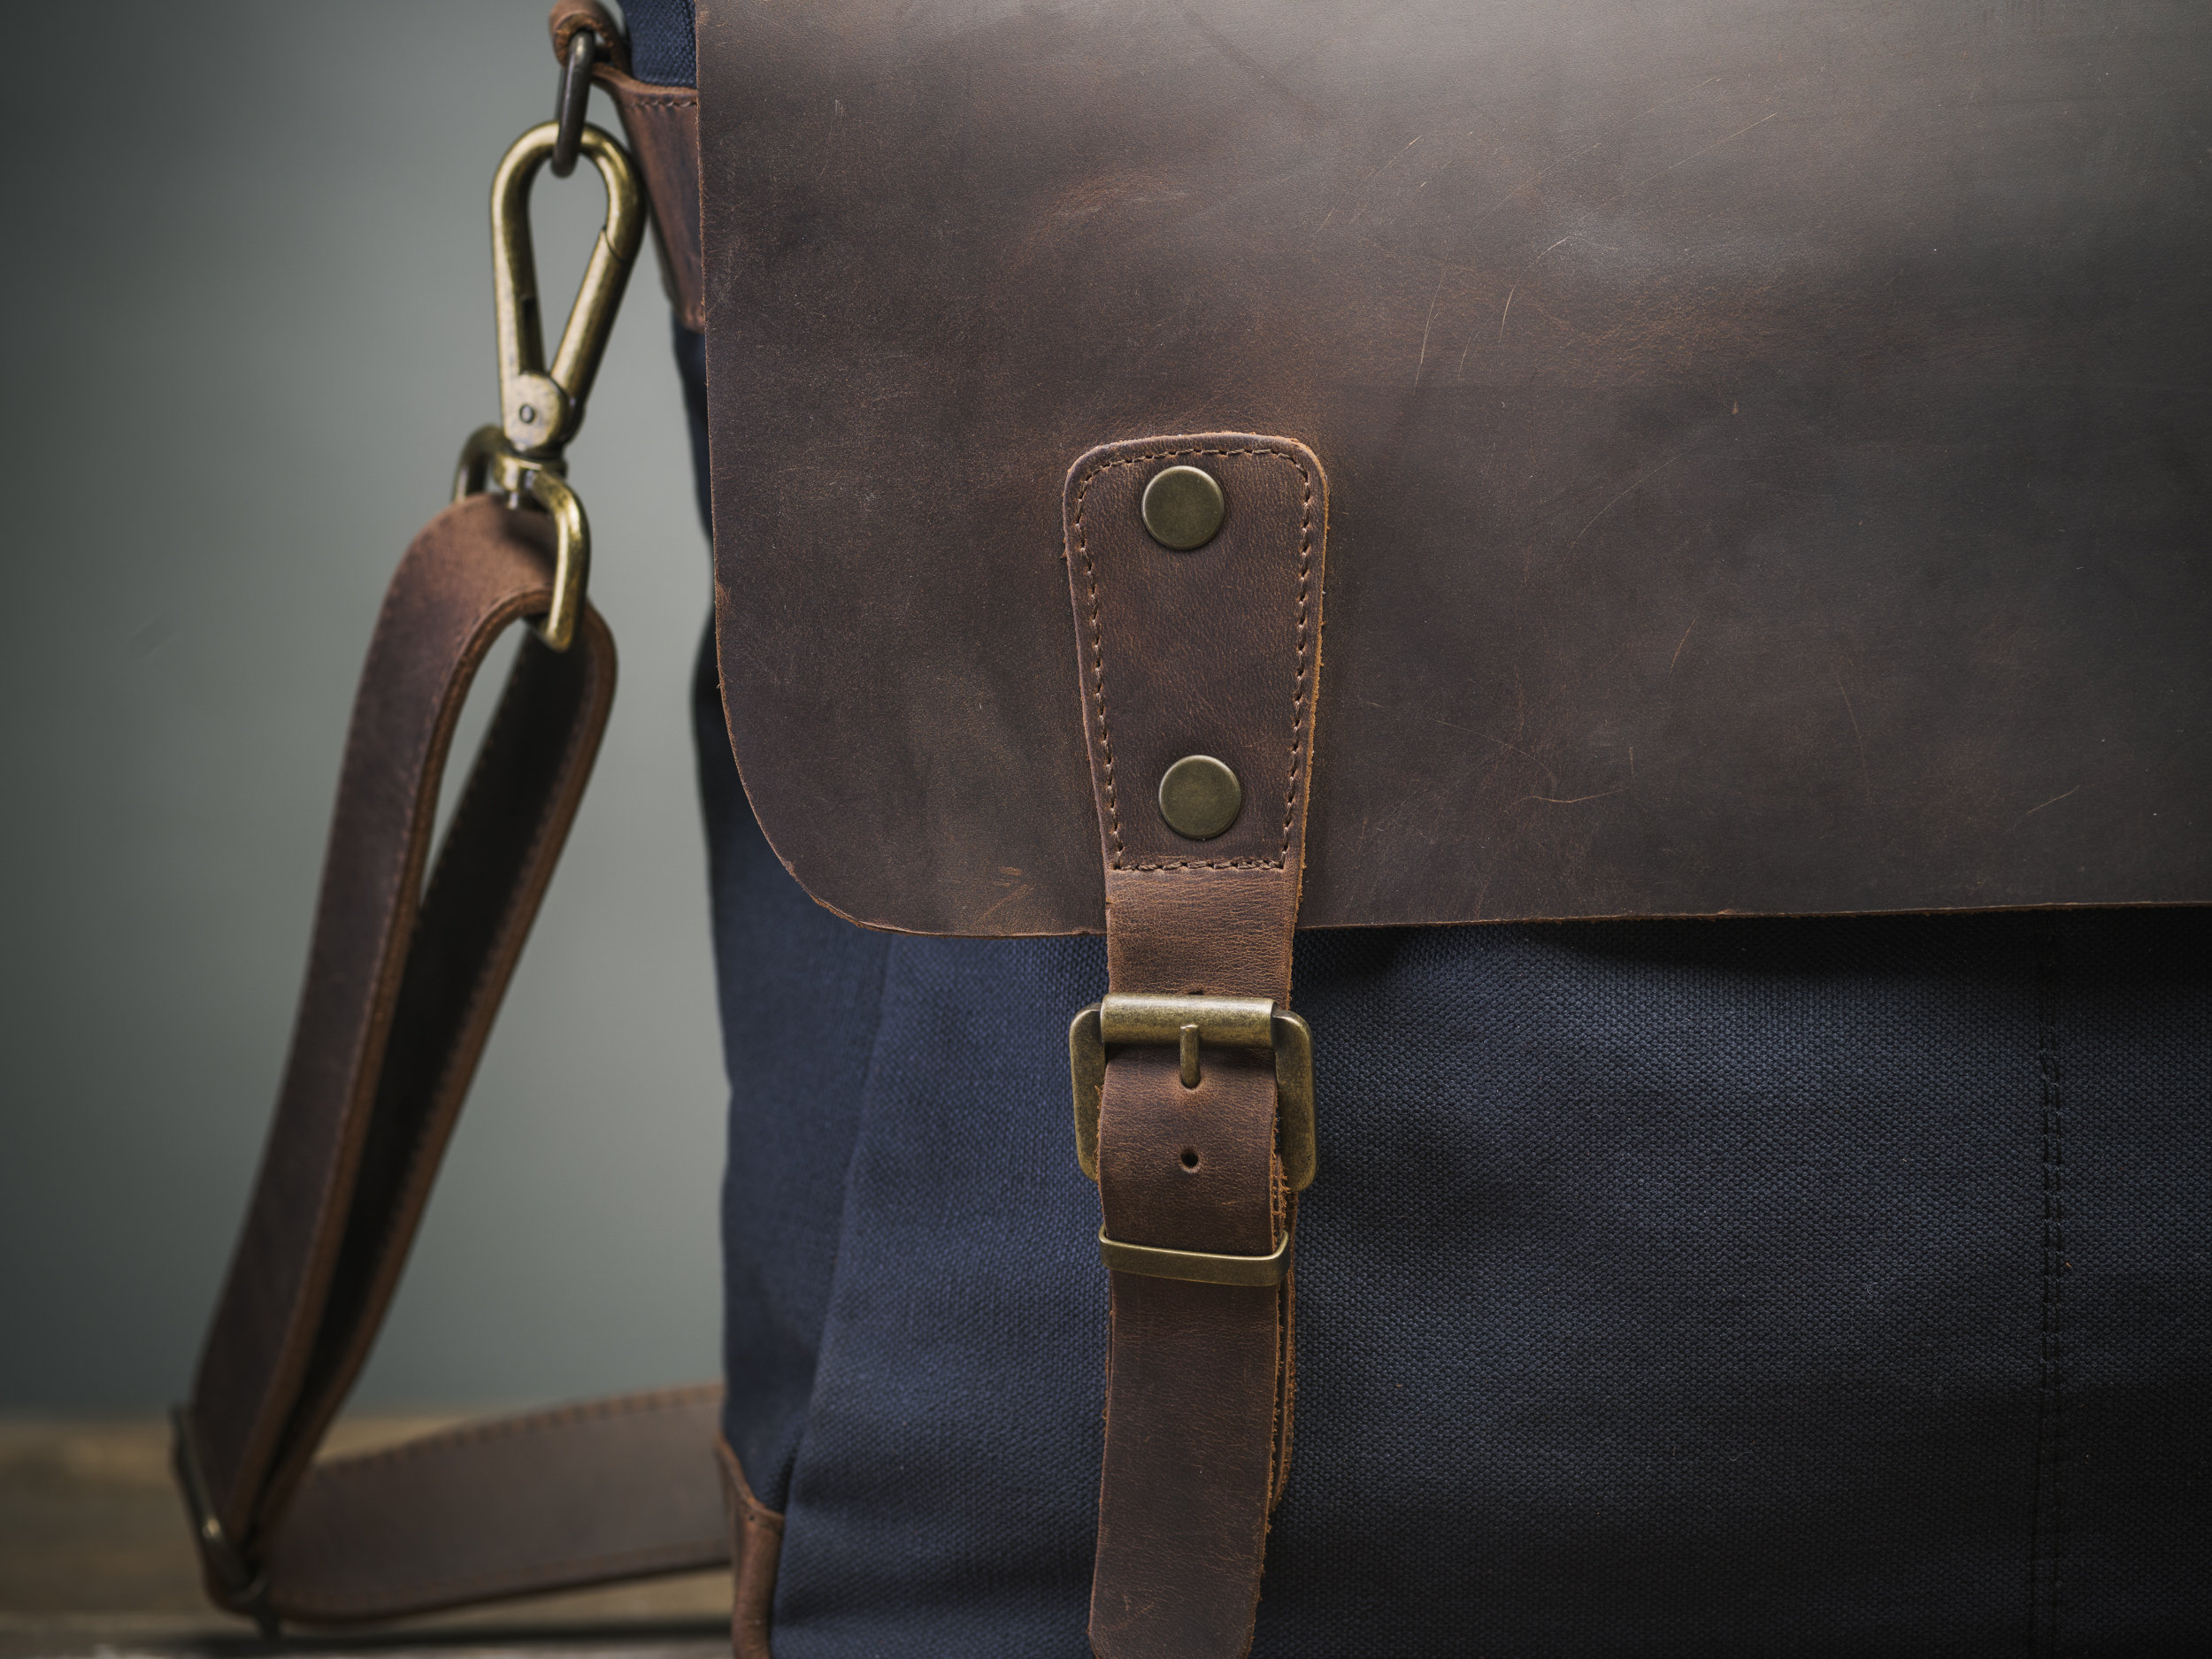 Tarpa | Slim Graphite Canvas & Tan Leather Messenger Bag